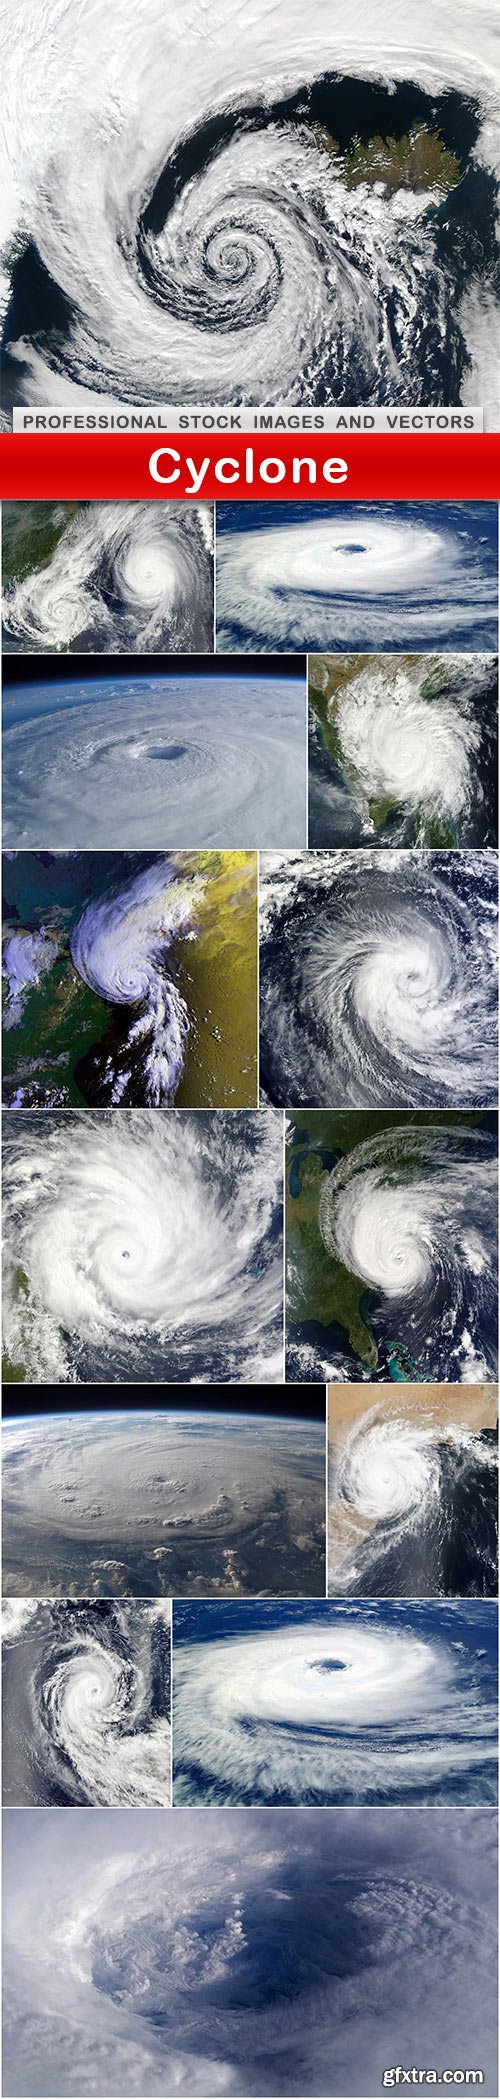 Cyclone - 14 UHQ JPEG